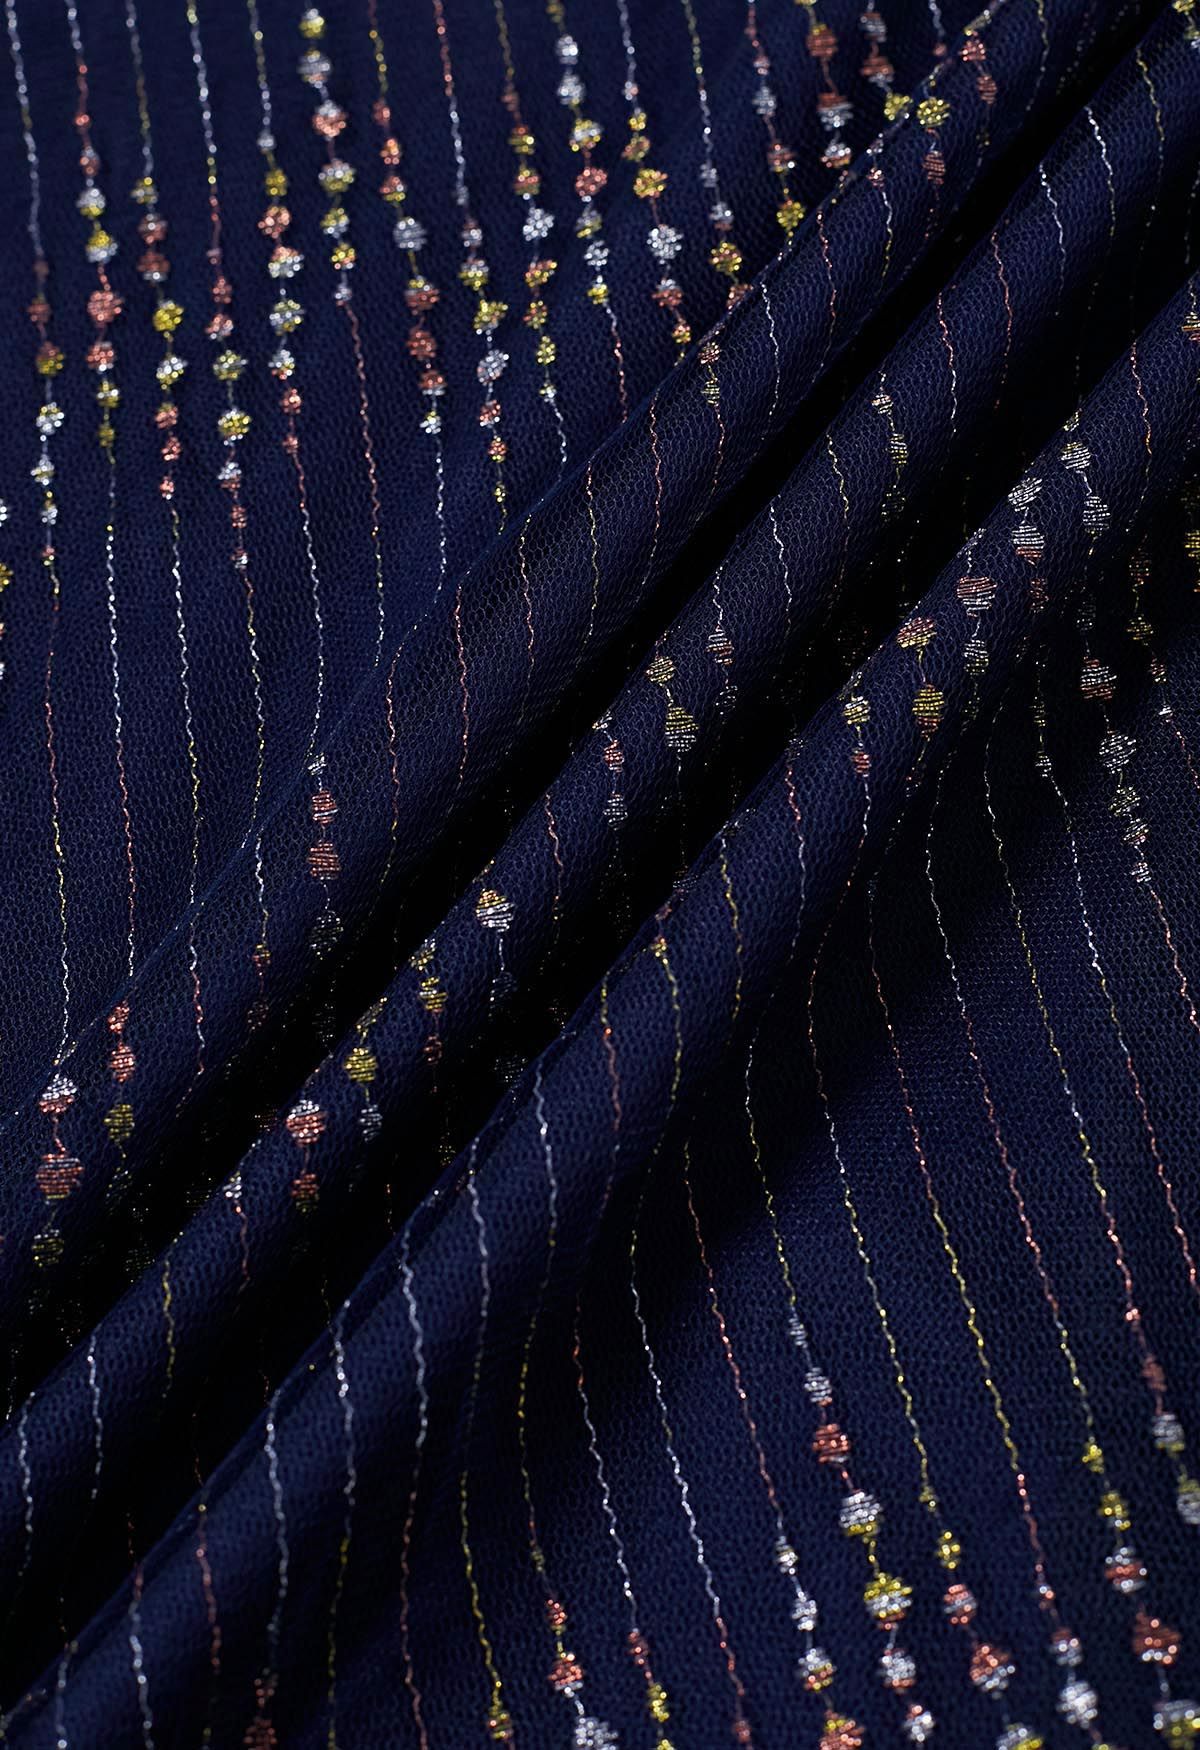 Glitter Thread Embroidery Mesh Tulle Maxi Skirt in Navy